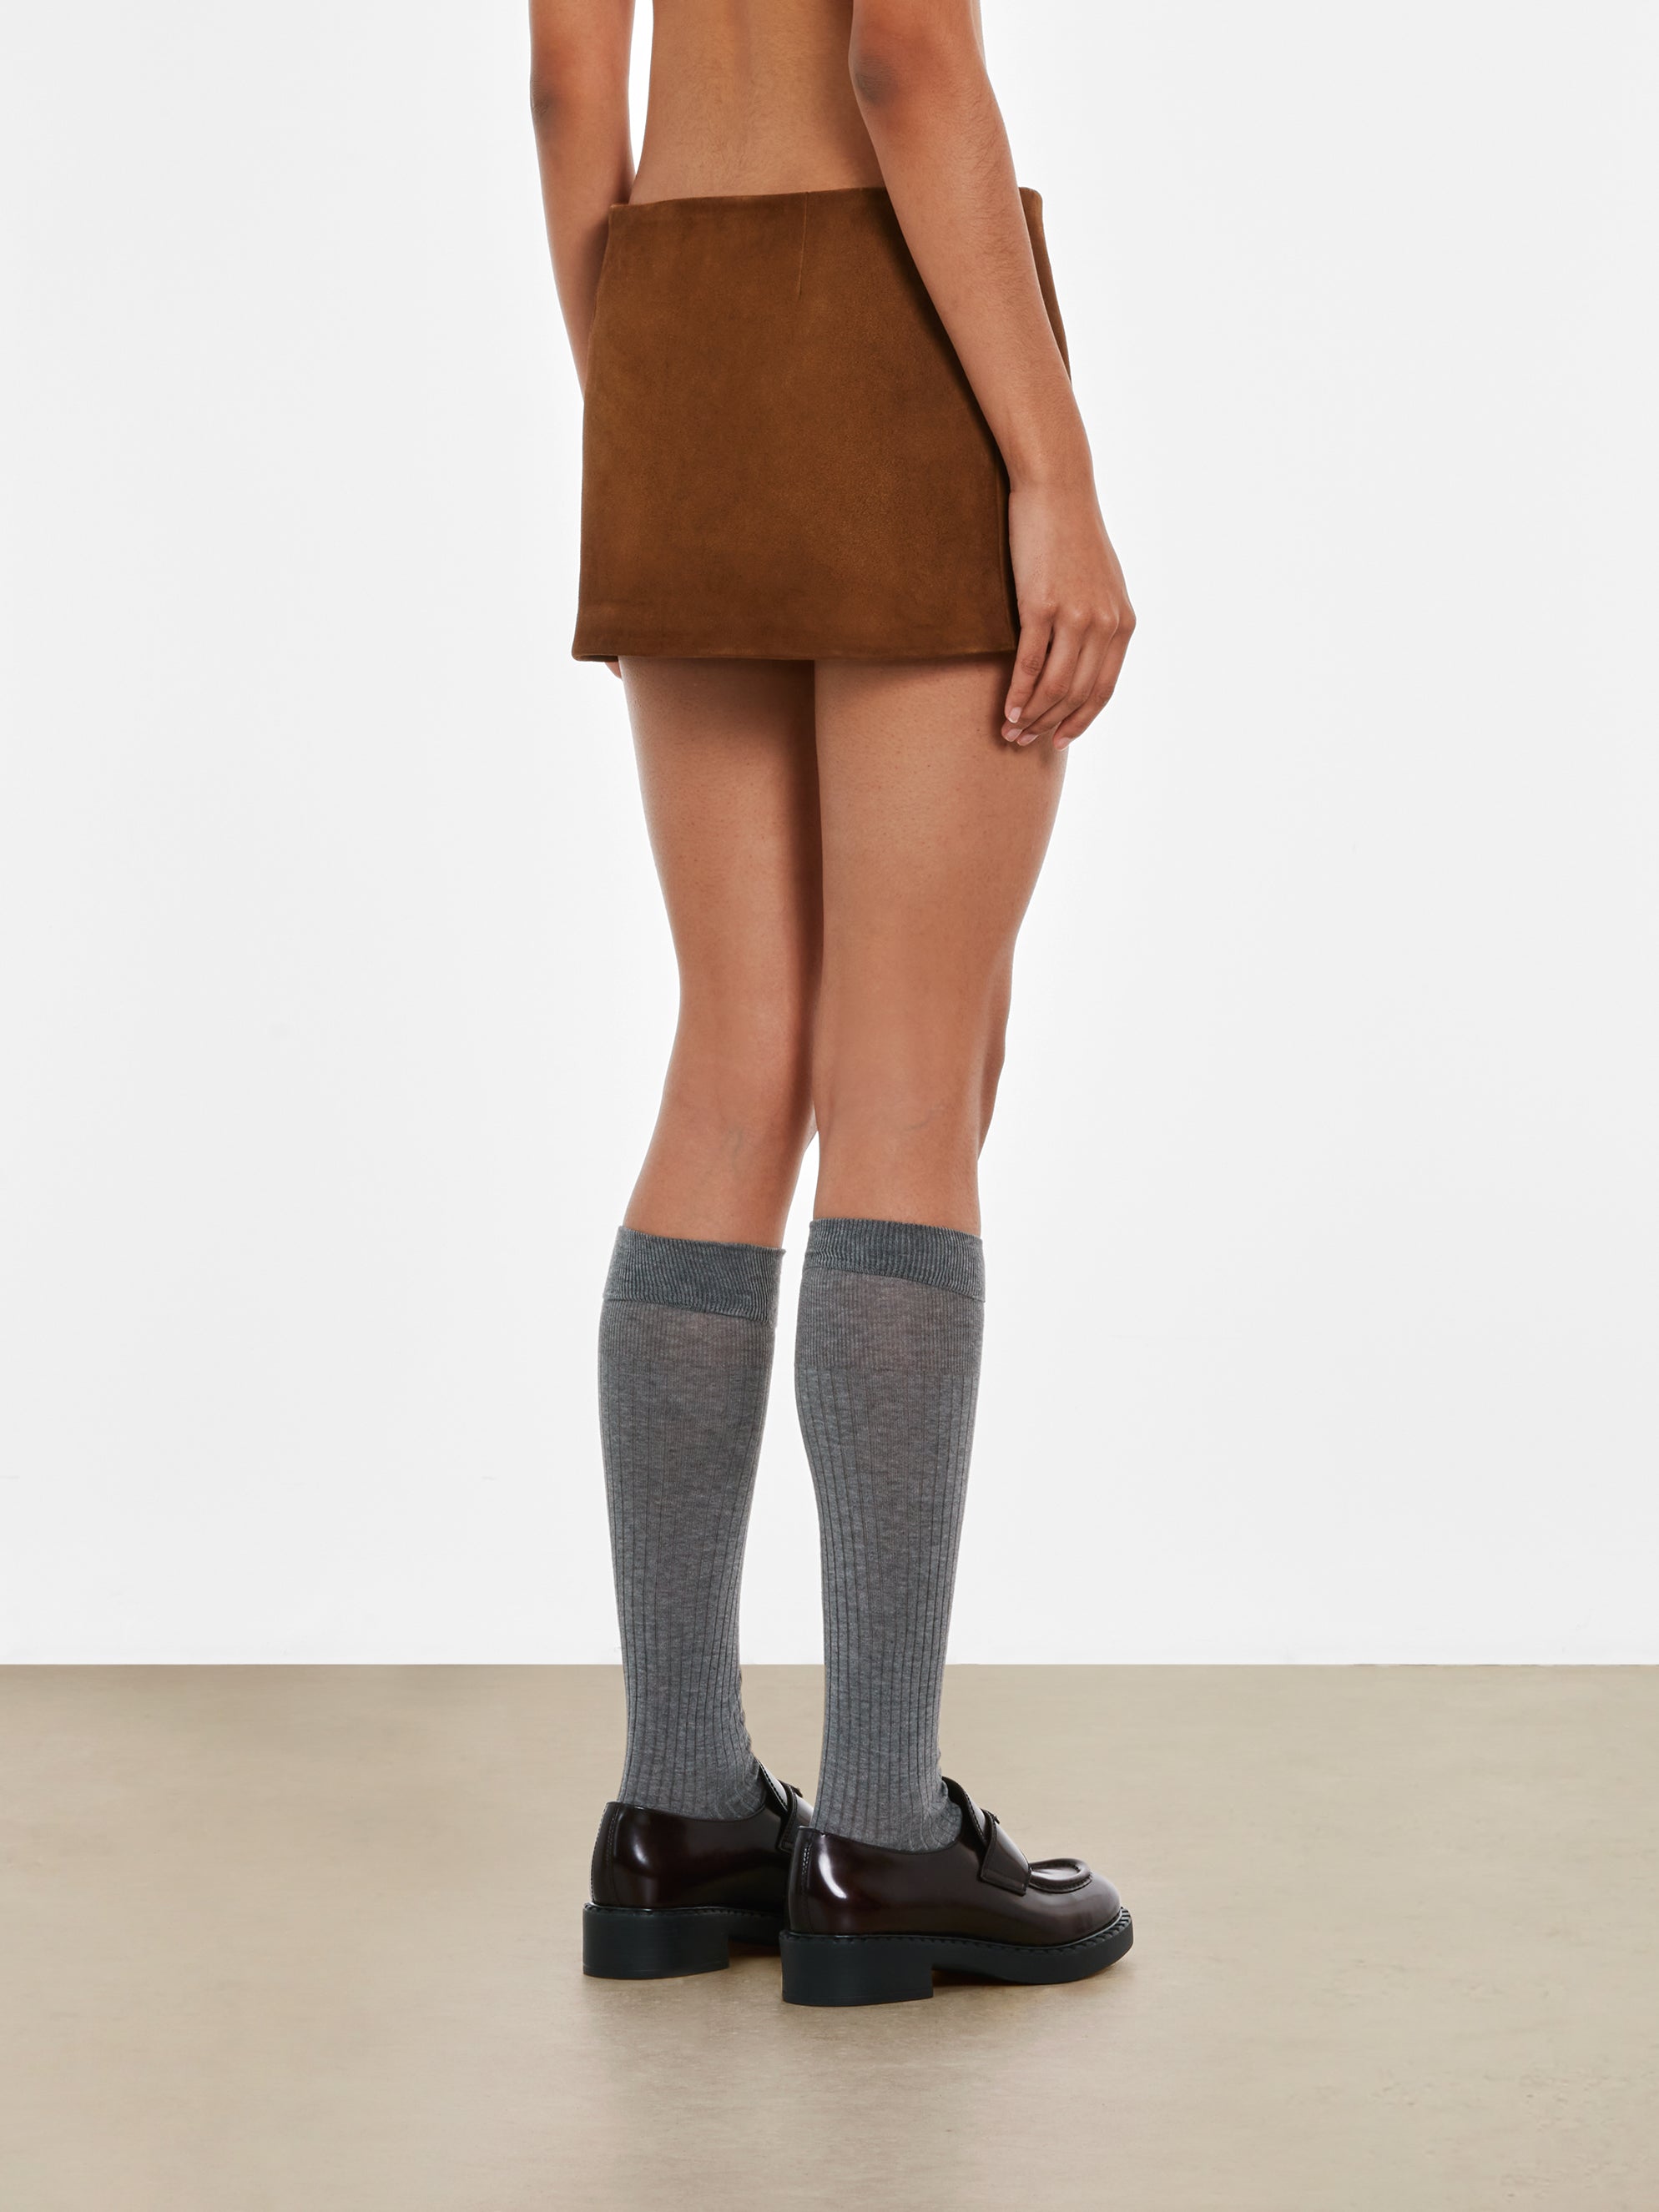 Prada - Women’s Leather Skirt - (Brown) view 4